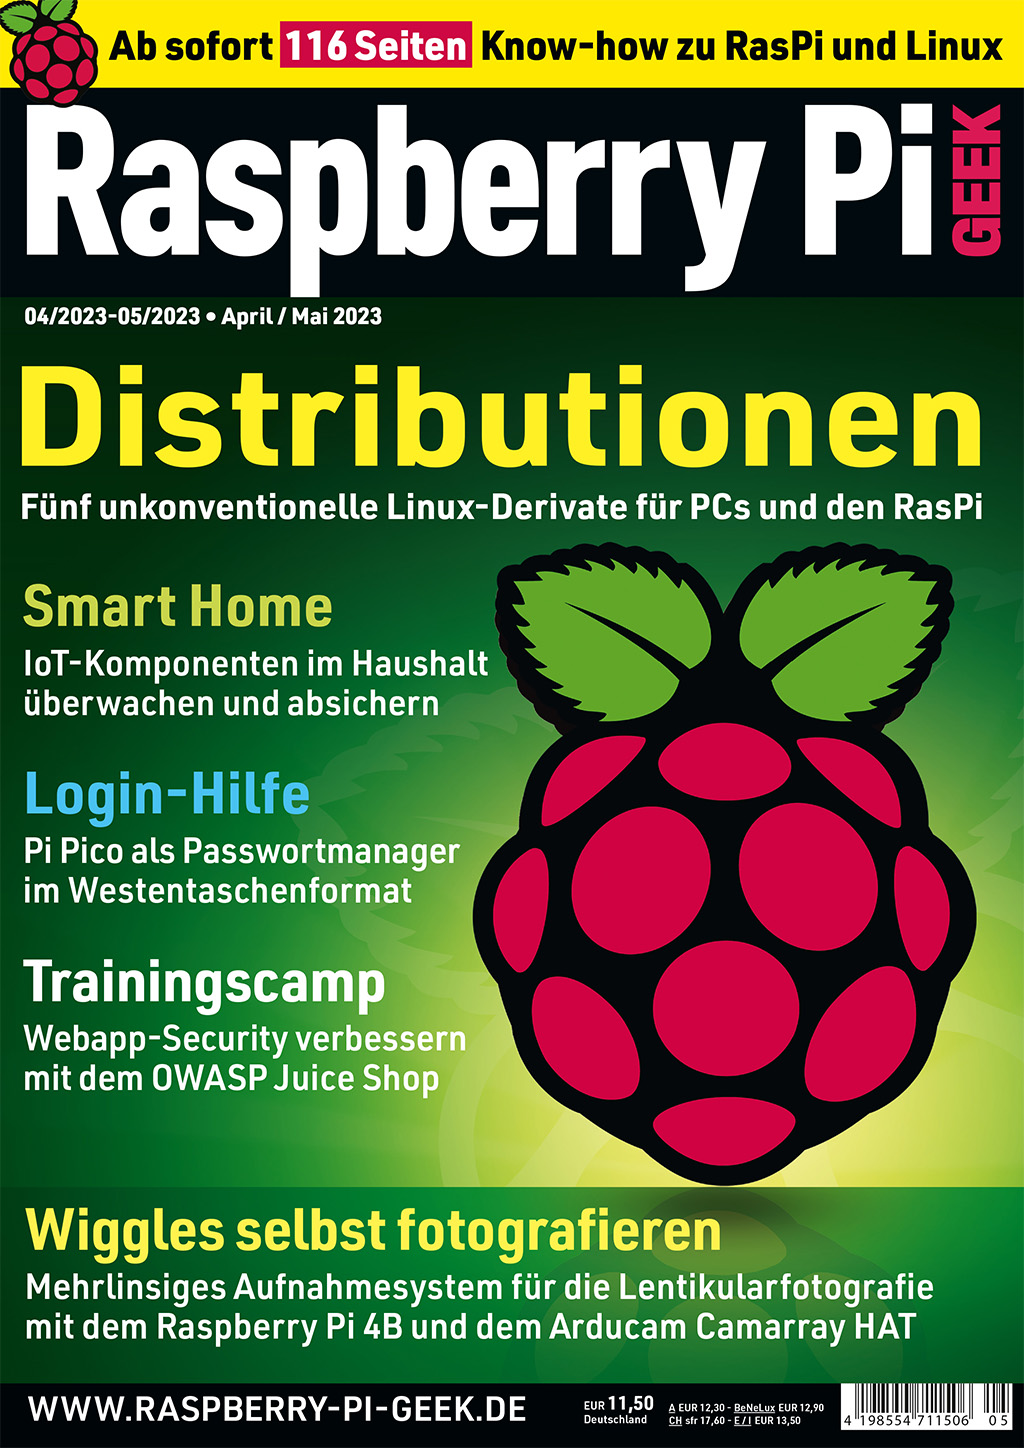 Raspberry Pi Geek ePaper 05/2023